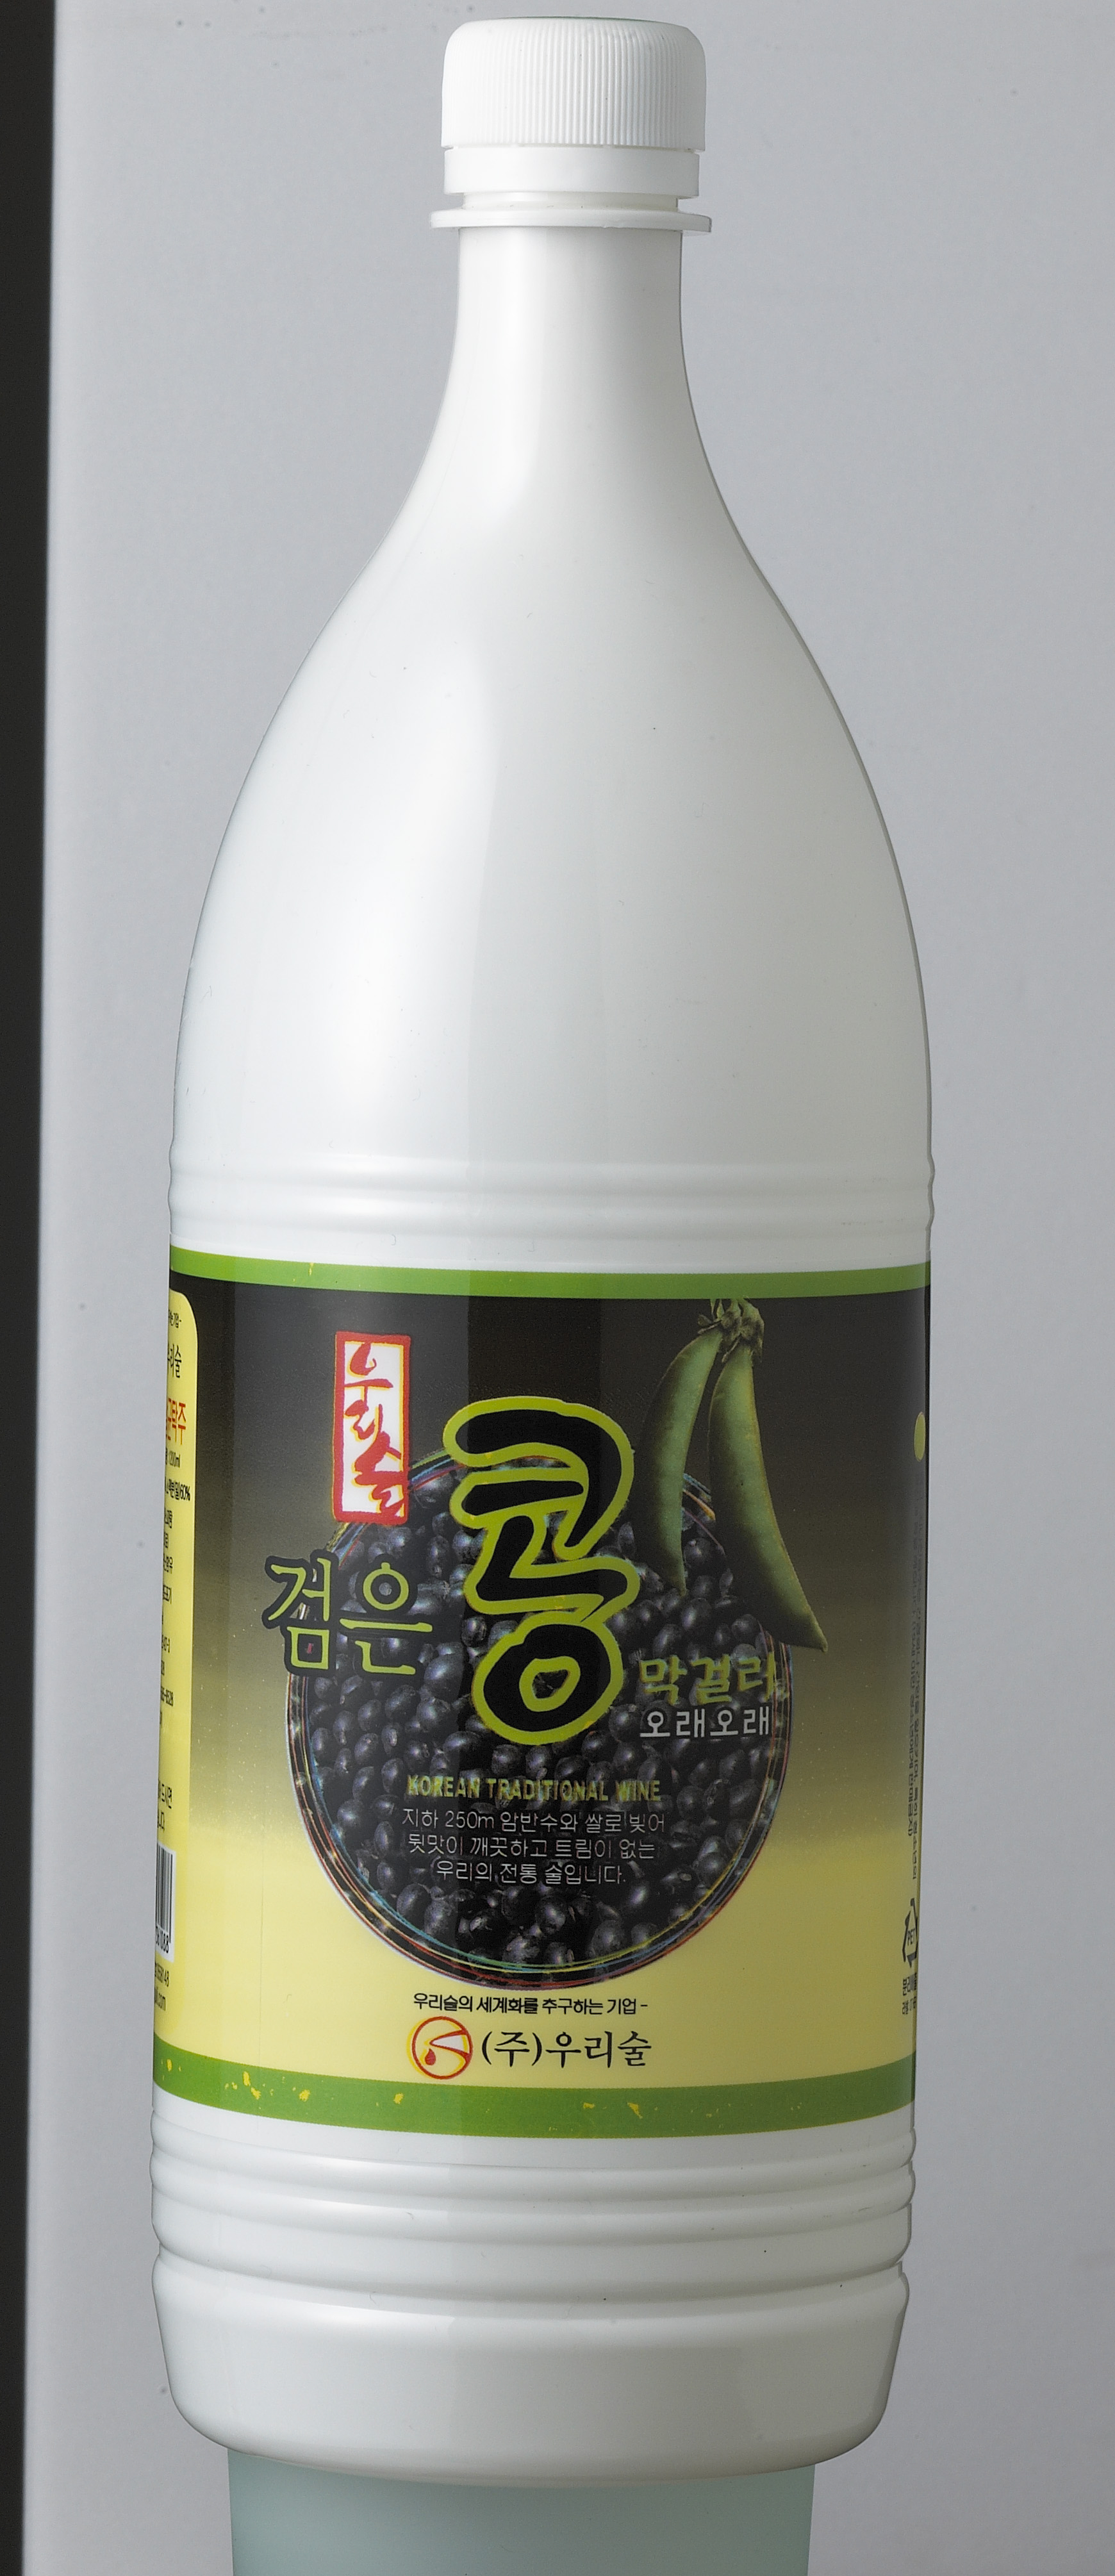 black been rice wine(1,200 ml)